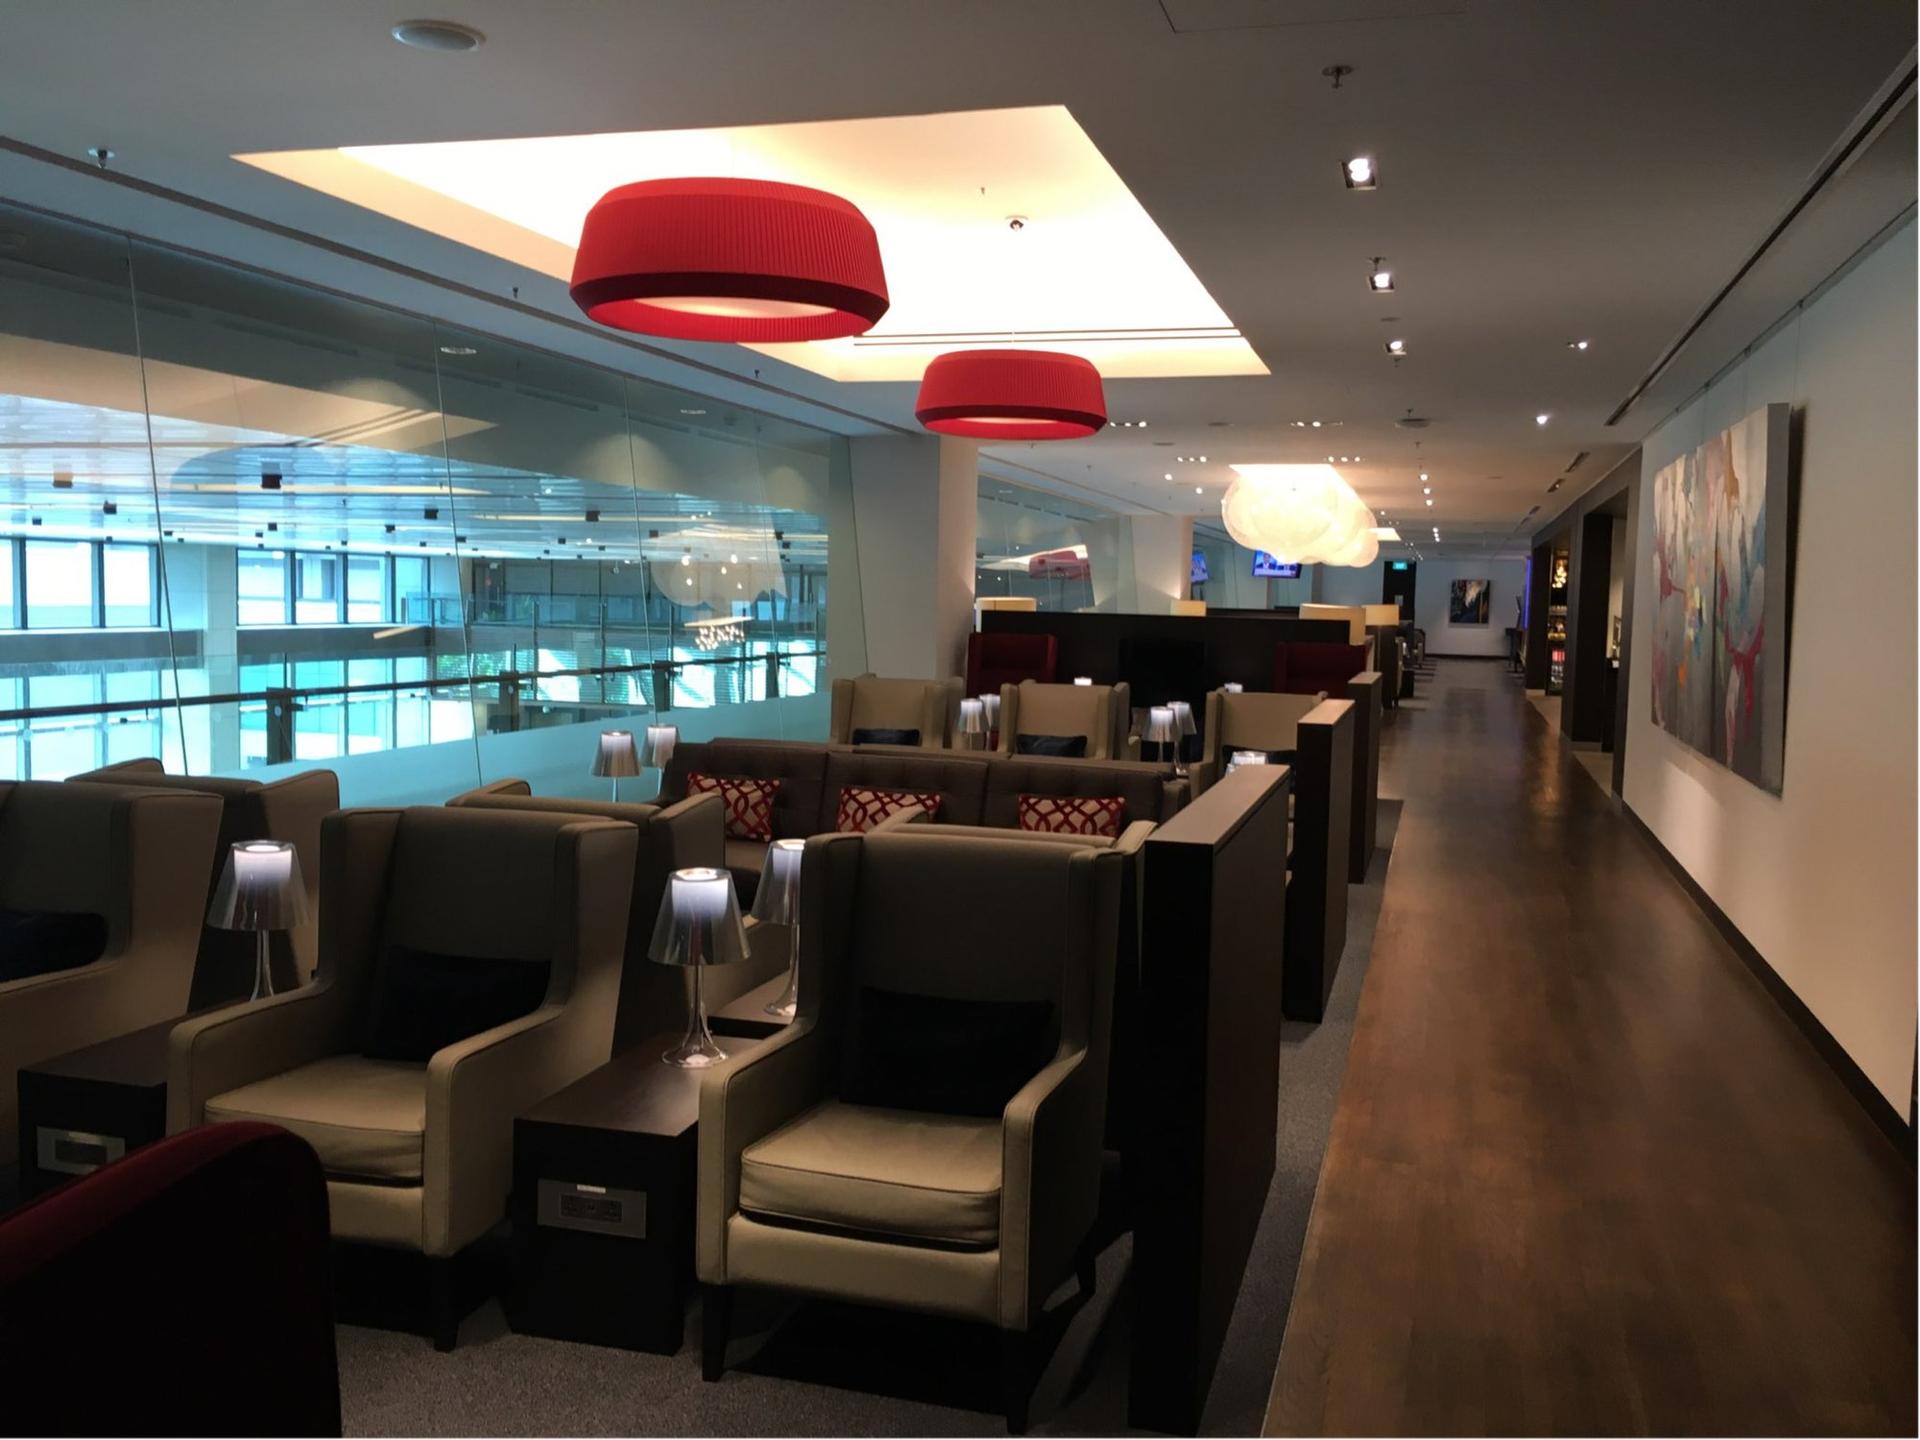 British Airways Singapore Lounge and Concorde Bar image 1 of 15